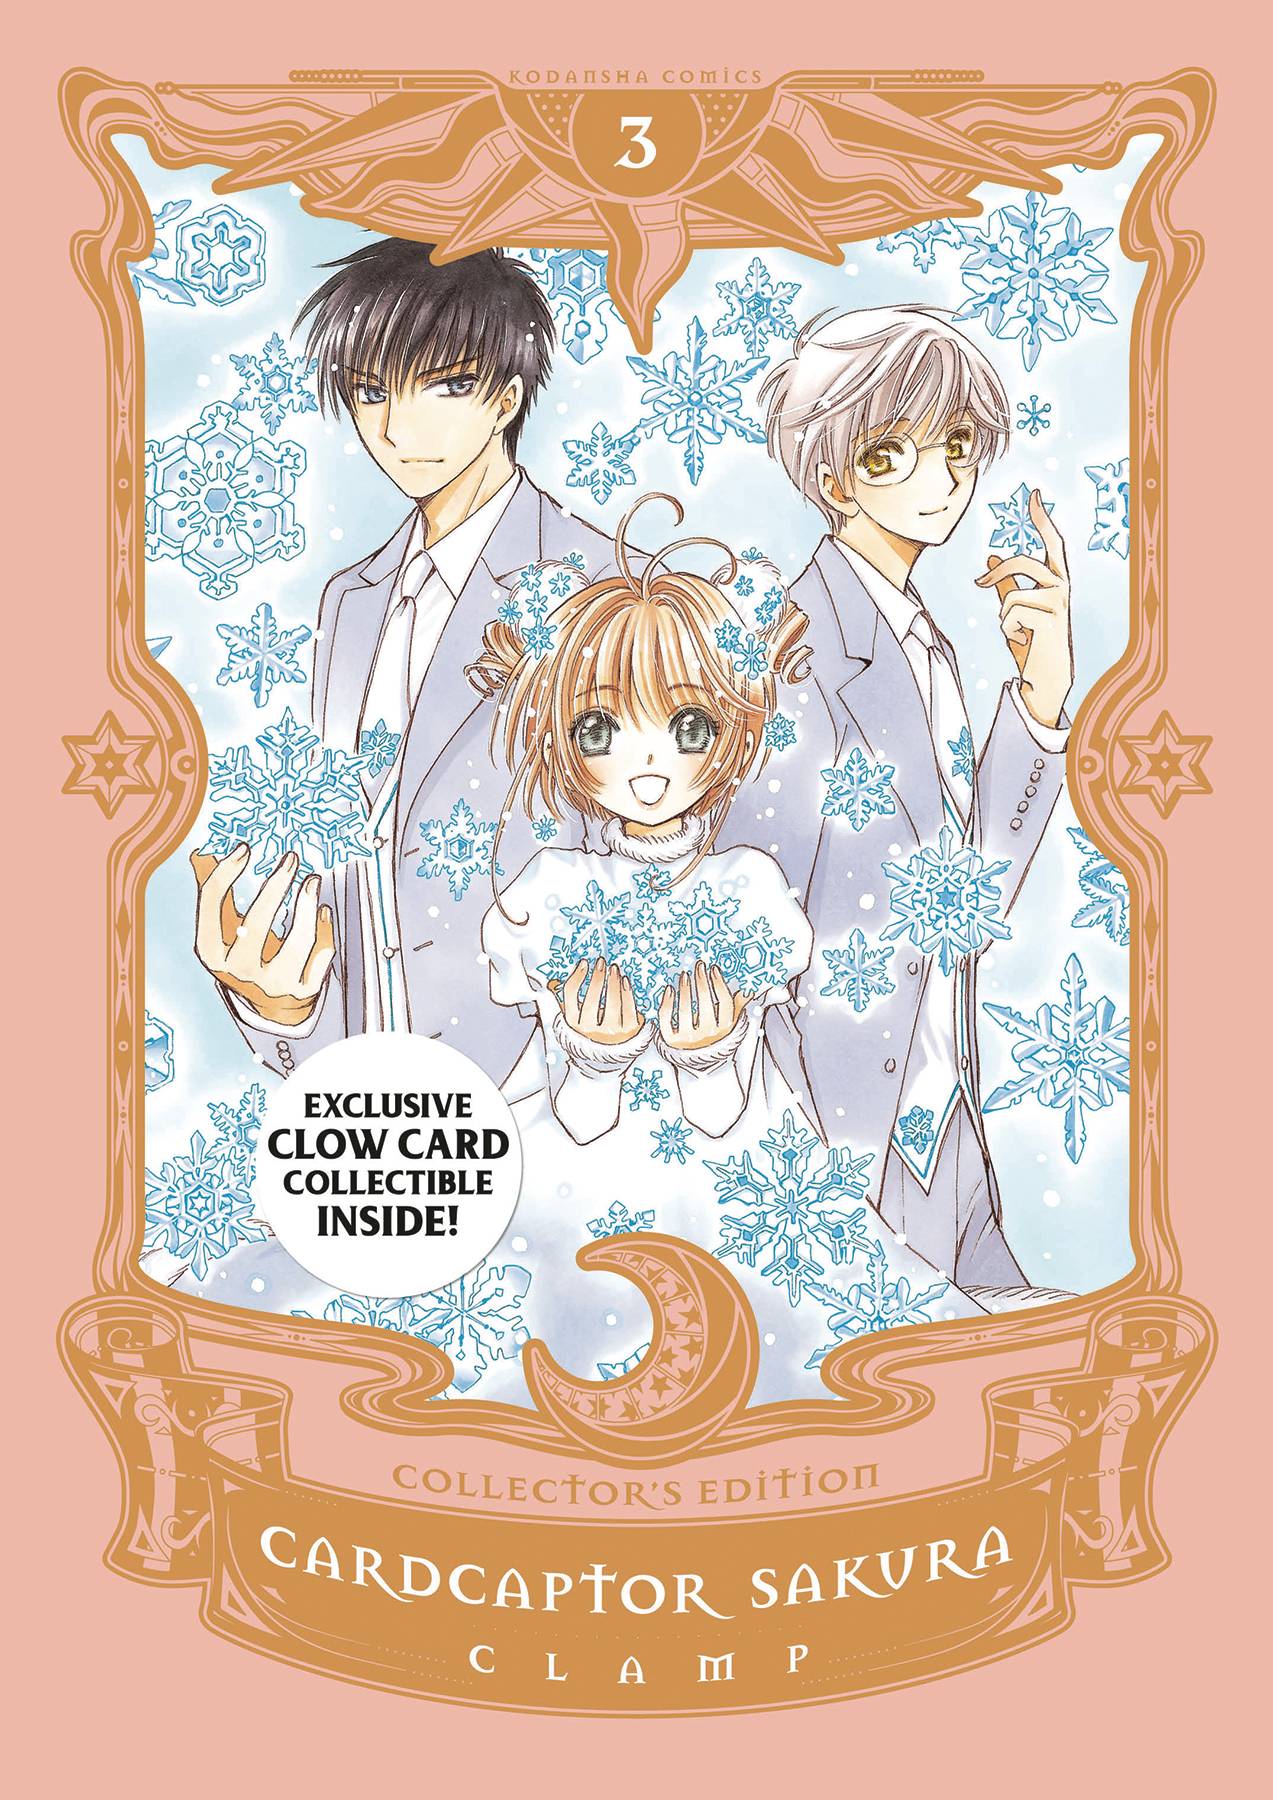 Cardcaptor Sakura Collected Edition Hardcover Volume 3 (Of 9)